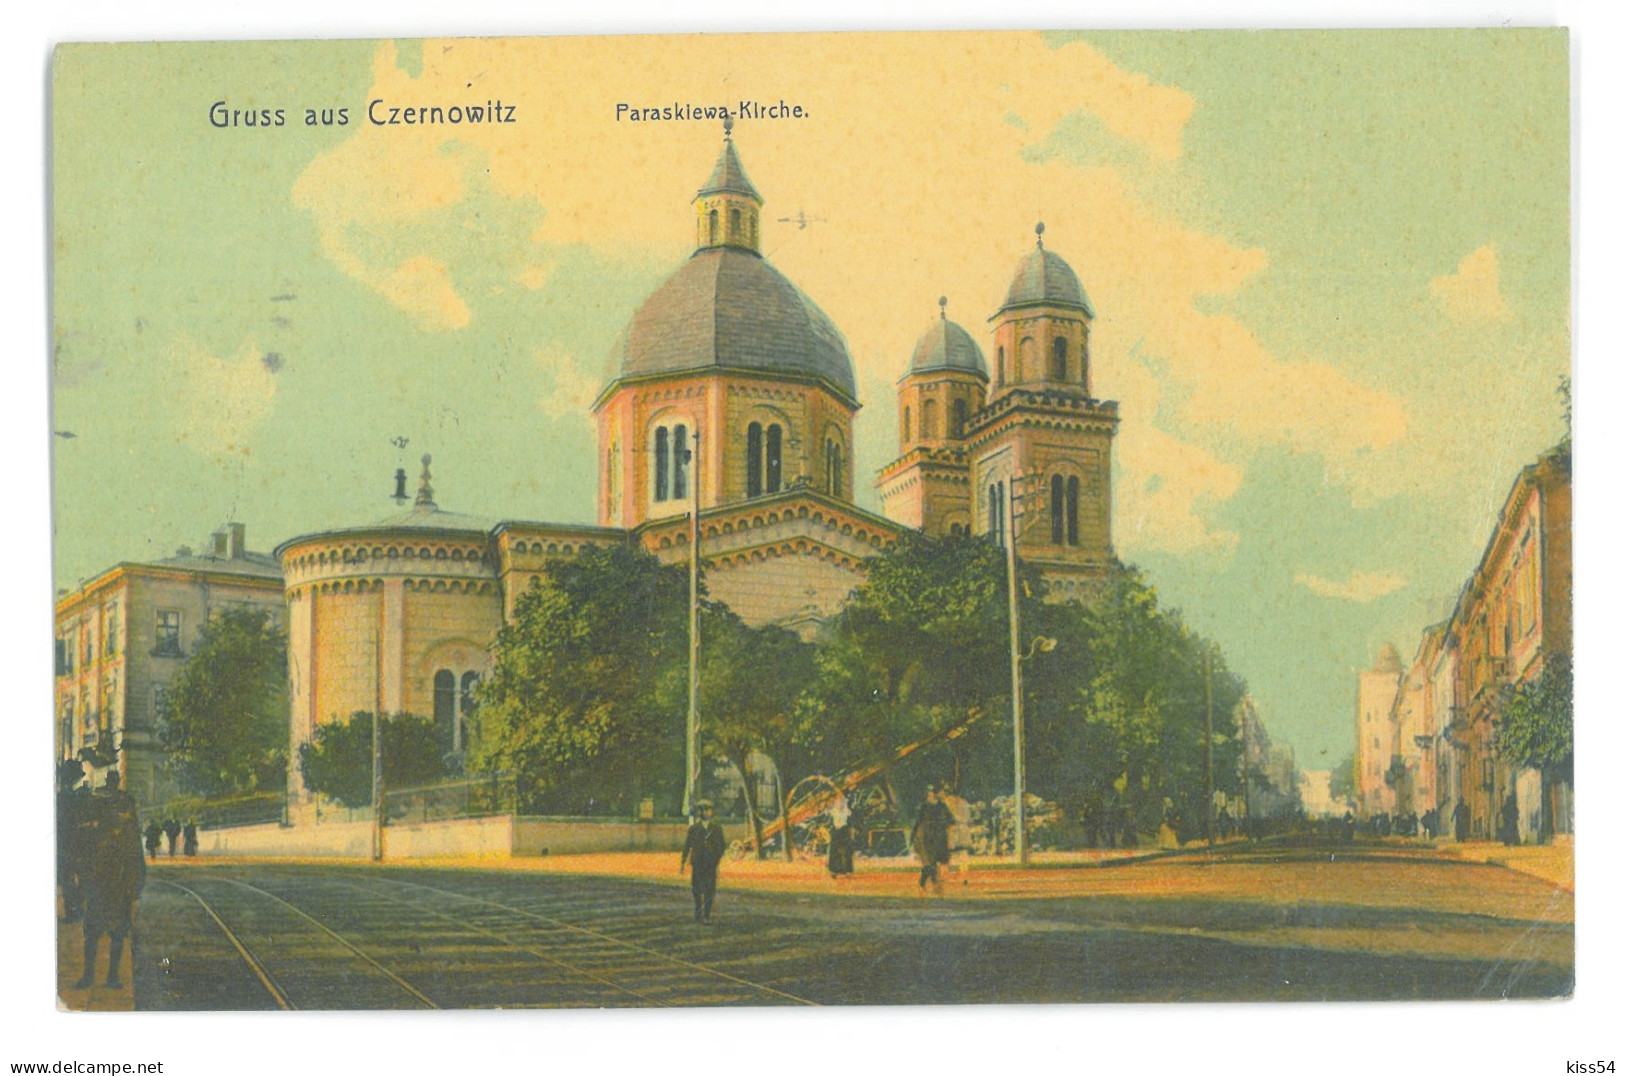 UK 20 - 18621 CZERNOWITZ, Bukowina, Church, Ukraine - Old Postcard - Used - 1909 - Ukraine